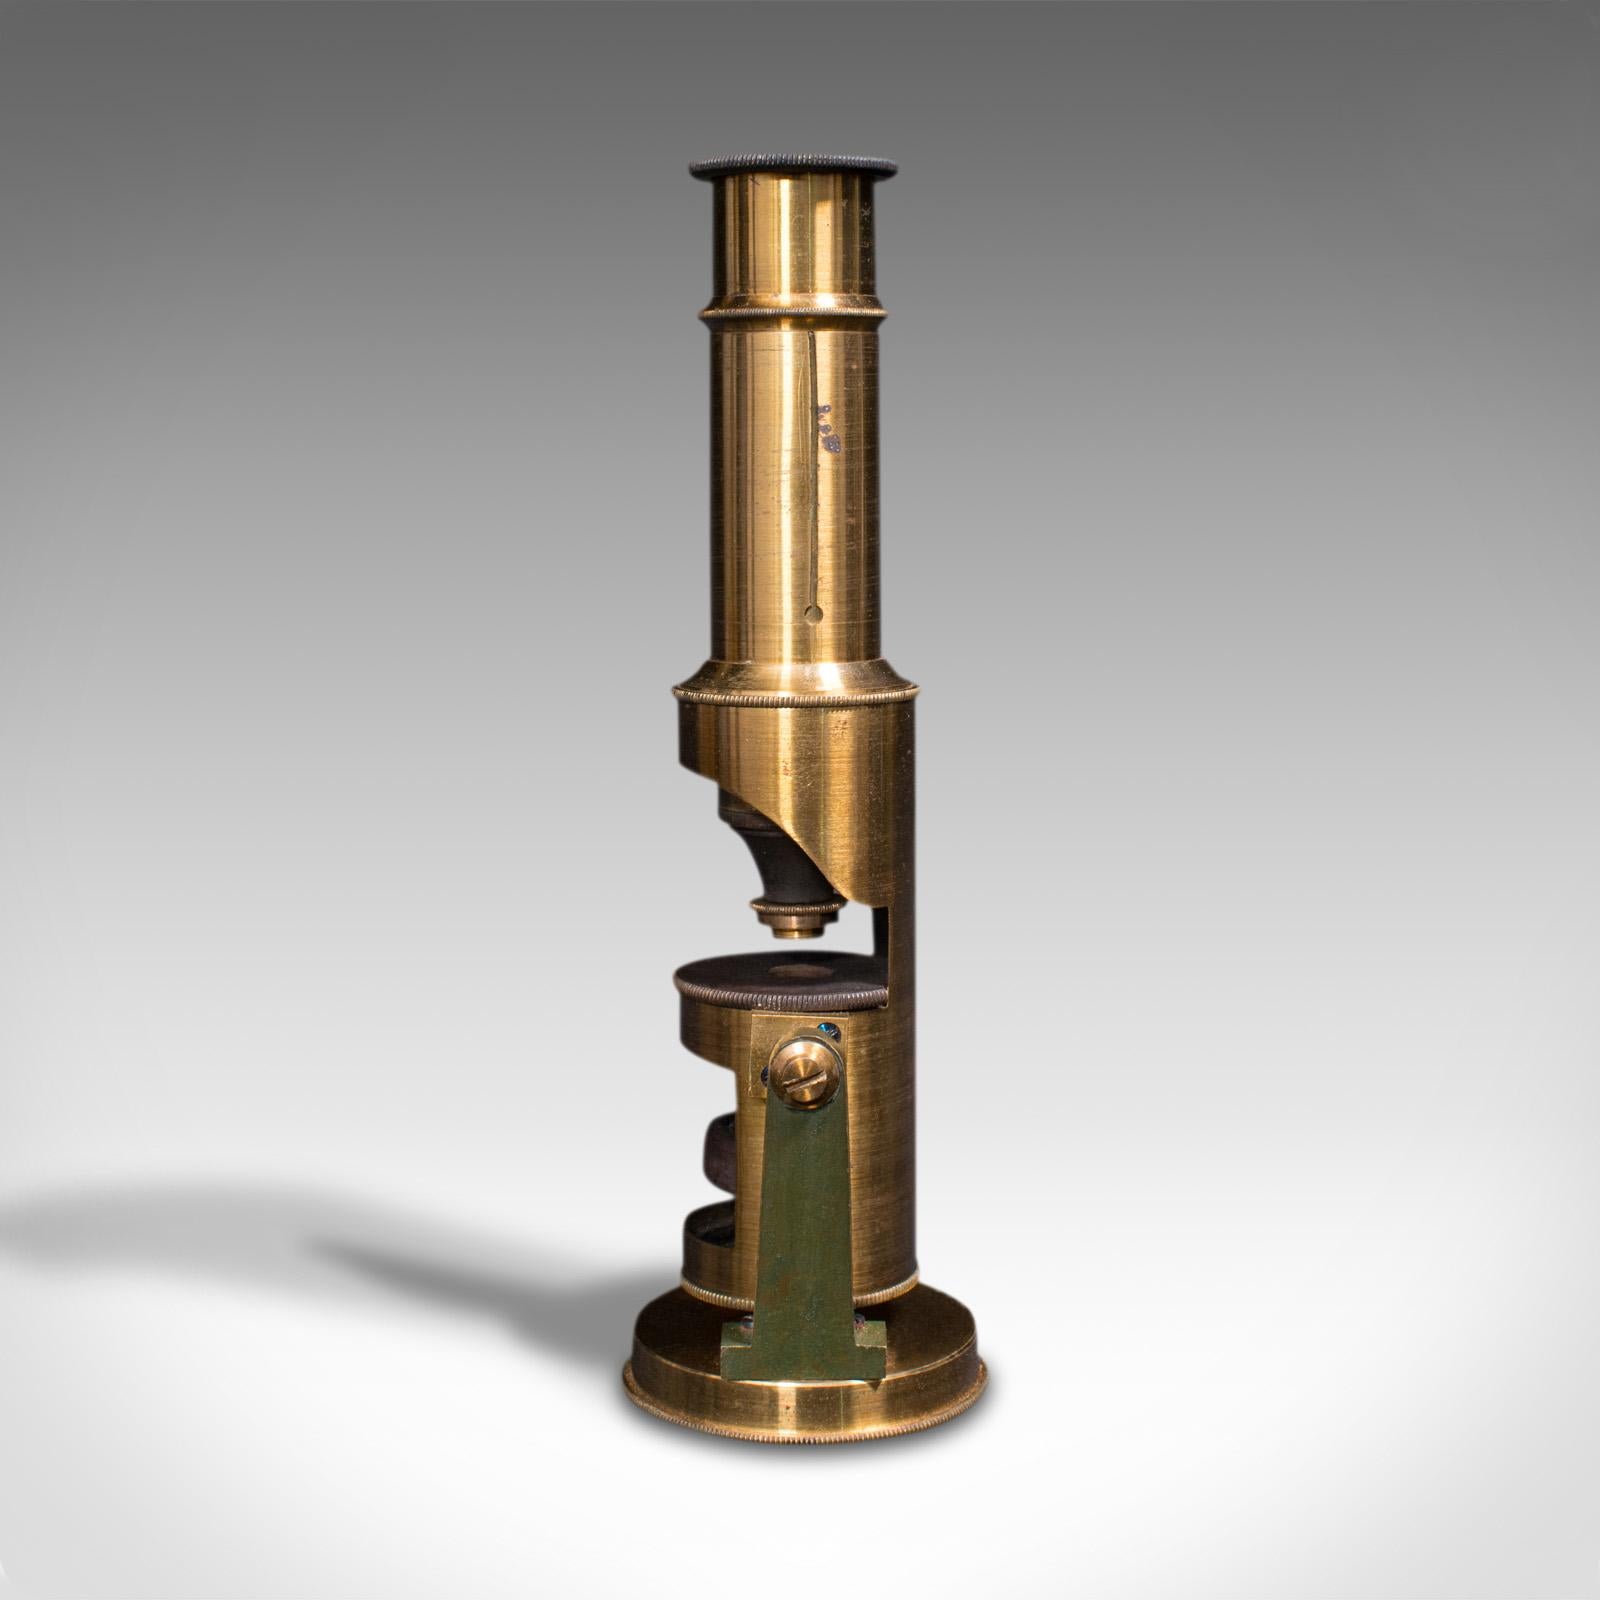 20th Century Vintage Scientist's Field Microscope, English, Brass, Pocket Instrument, C.1930